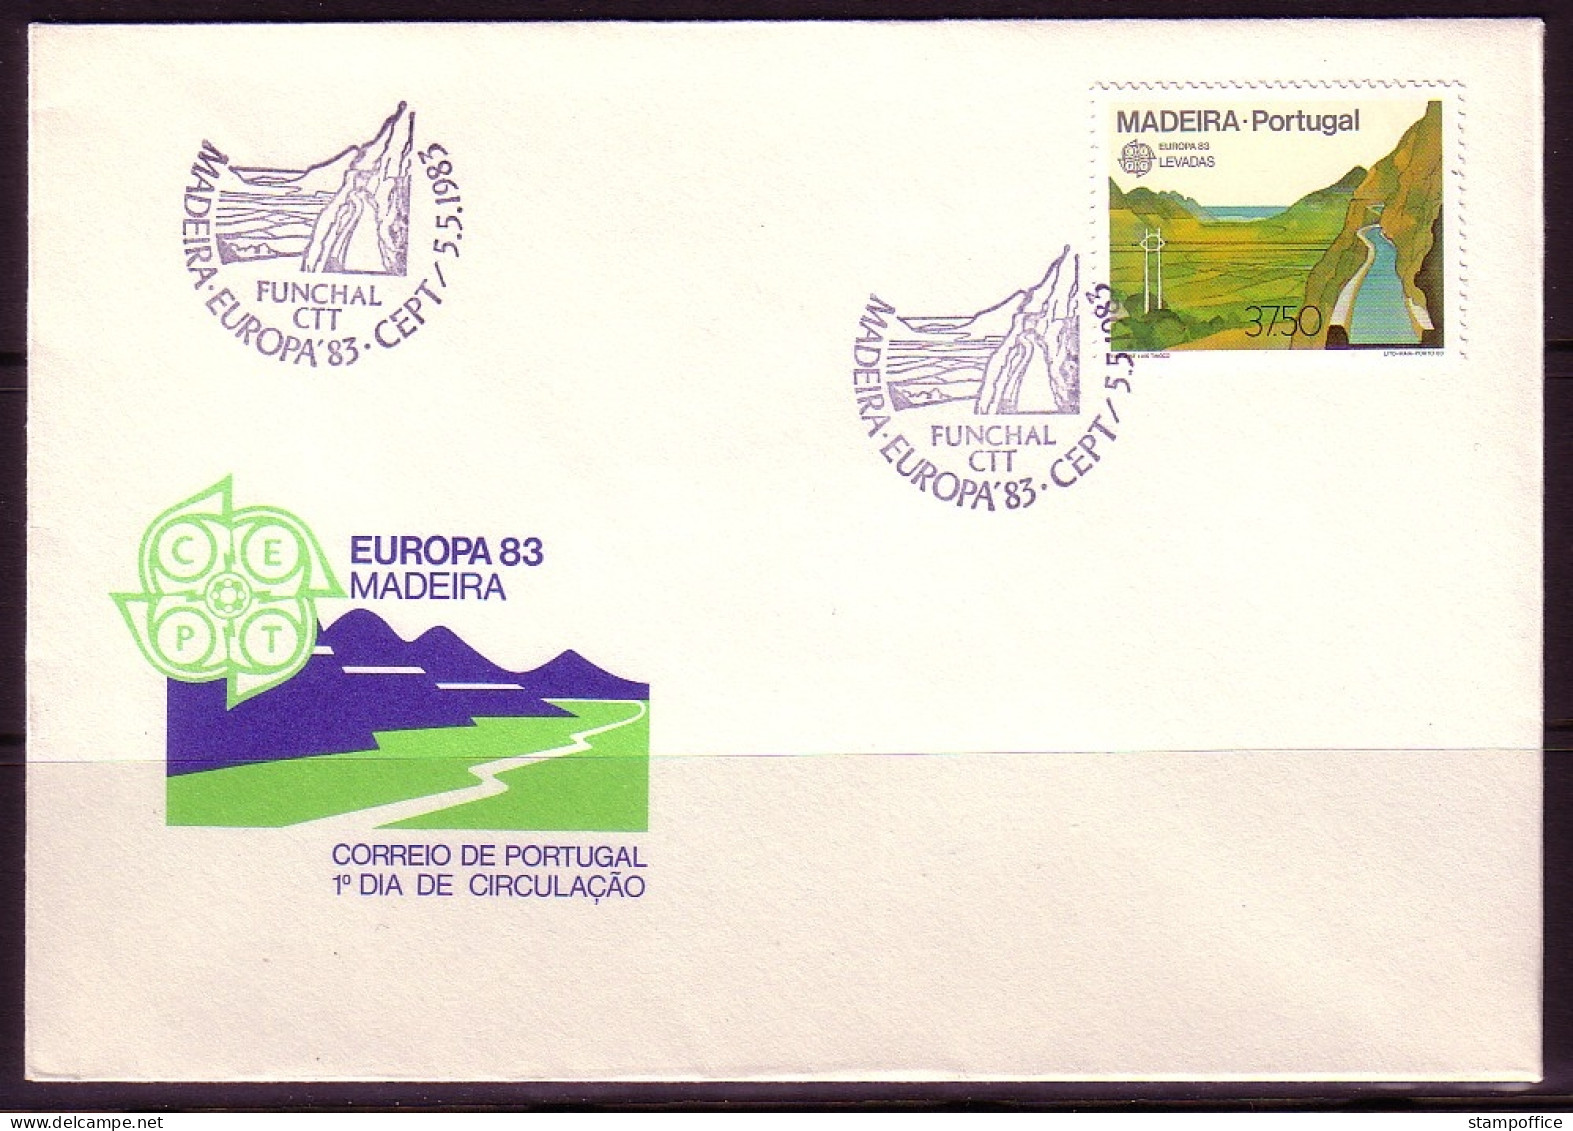 MADEIRA MI-NR. 84 FDC EUROPA 1983 - GROSSE WERKE - 1983